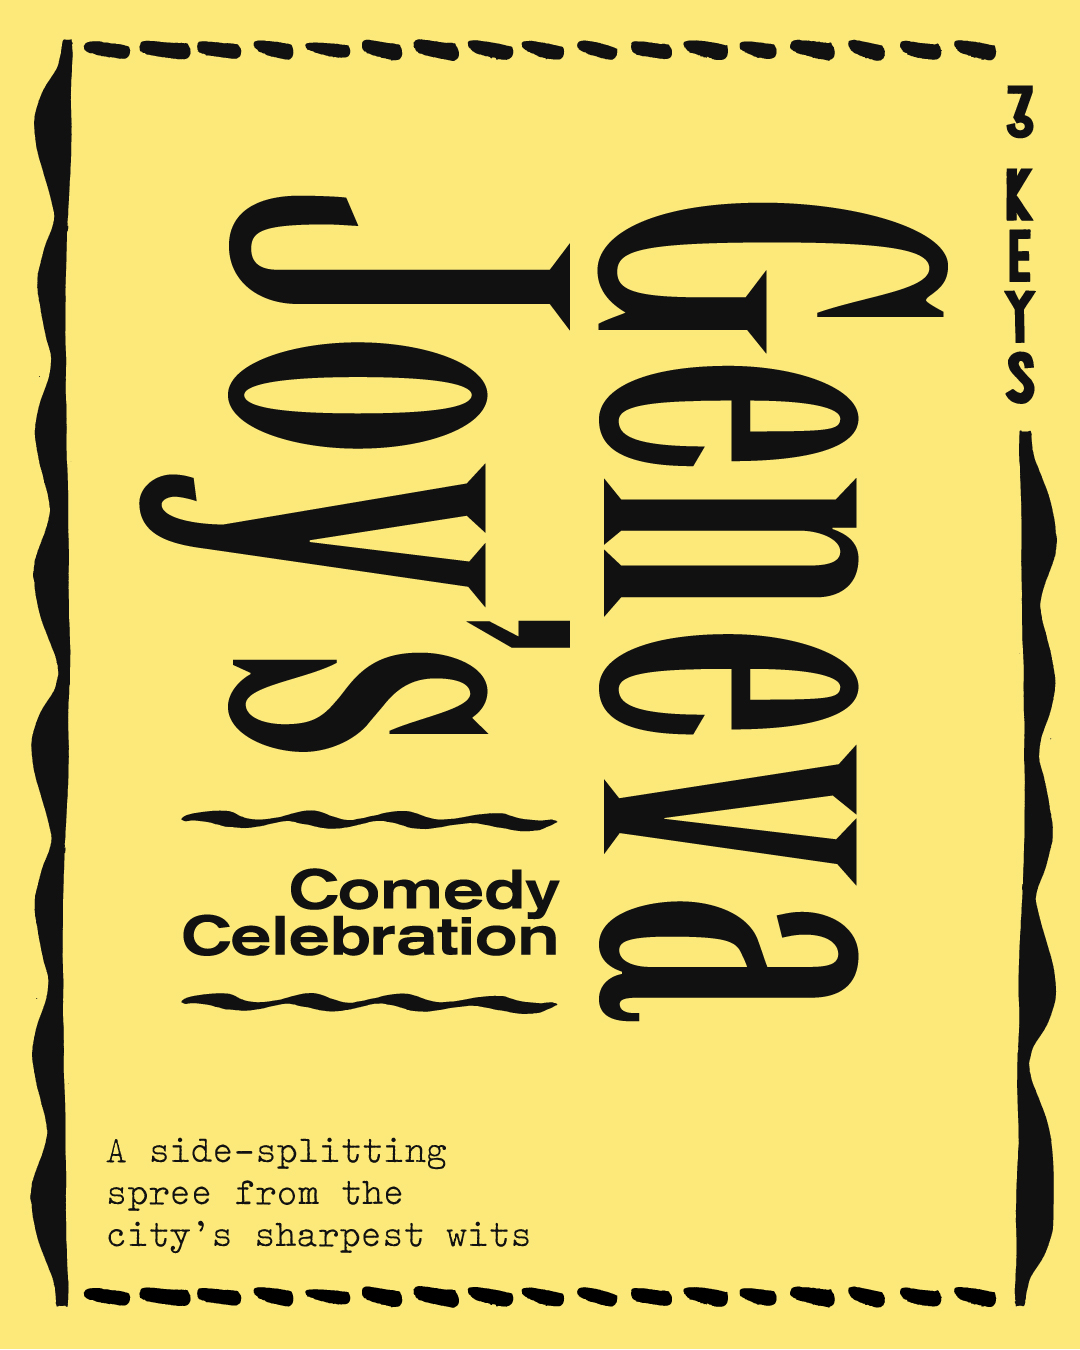 Geneva Joy's Comedy Celebration promo